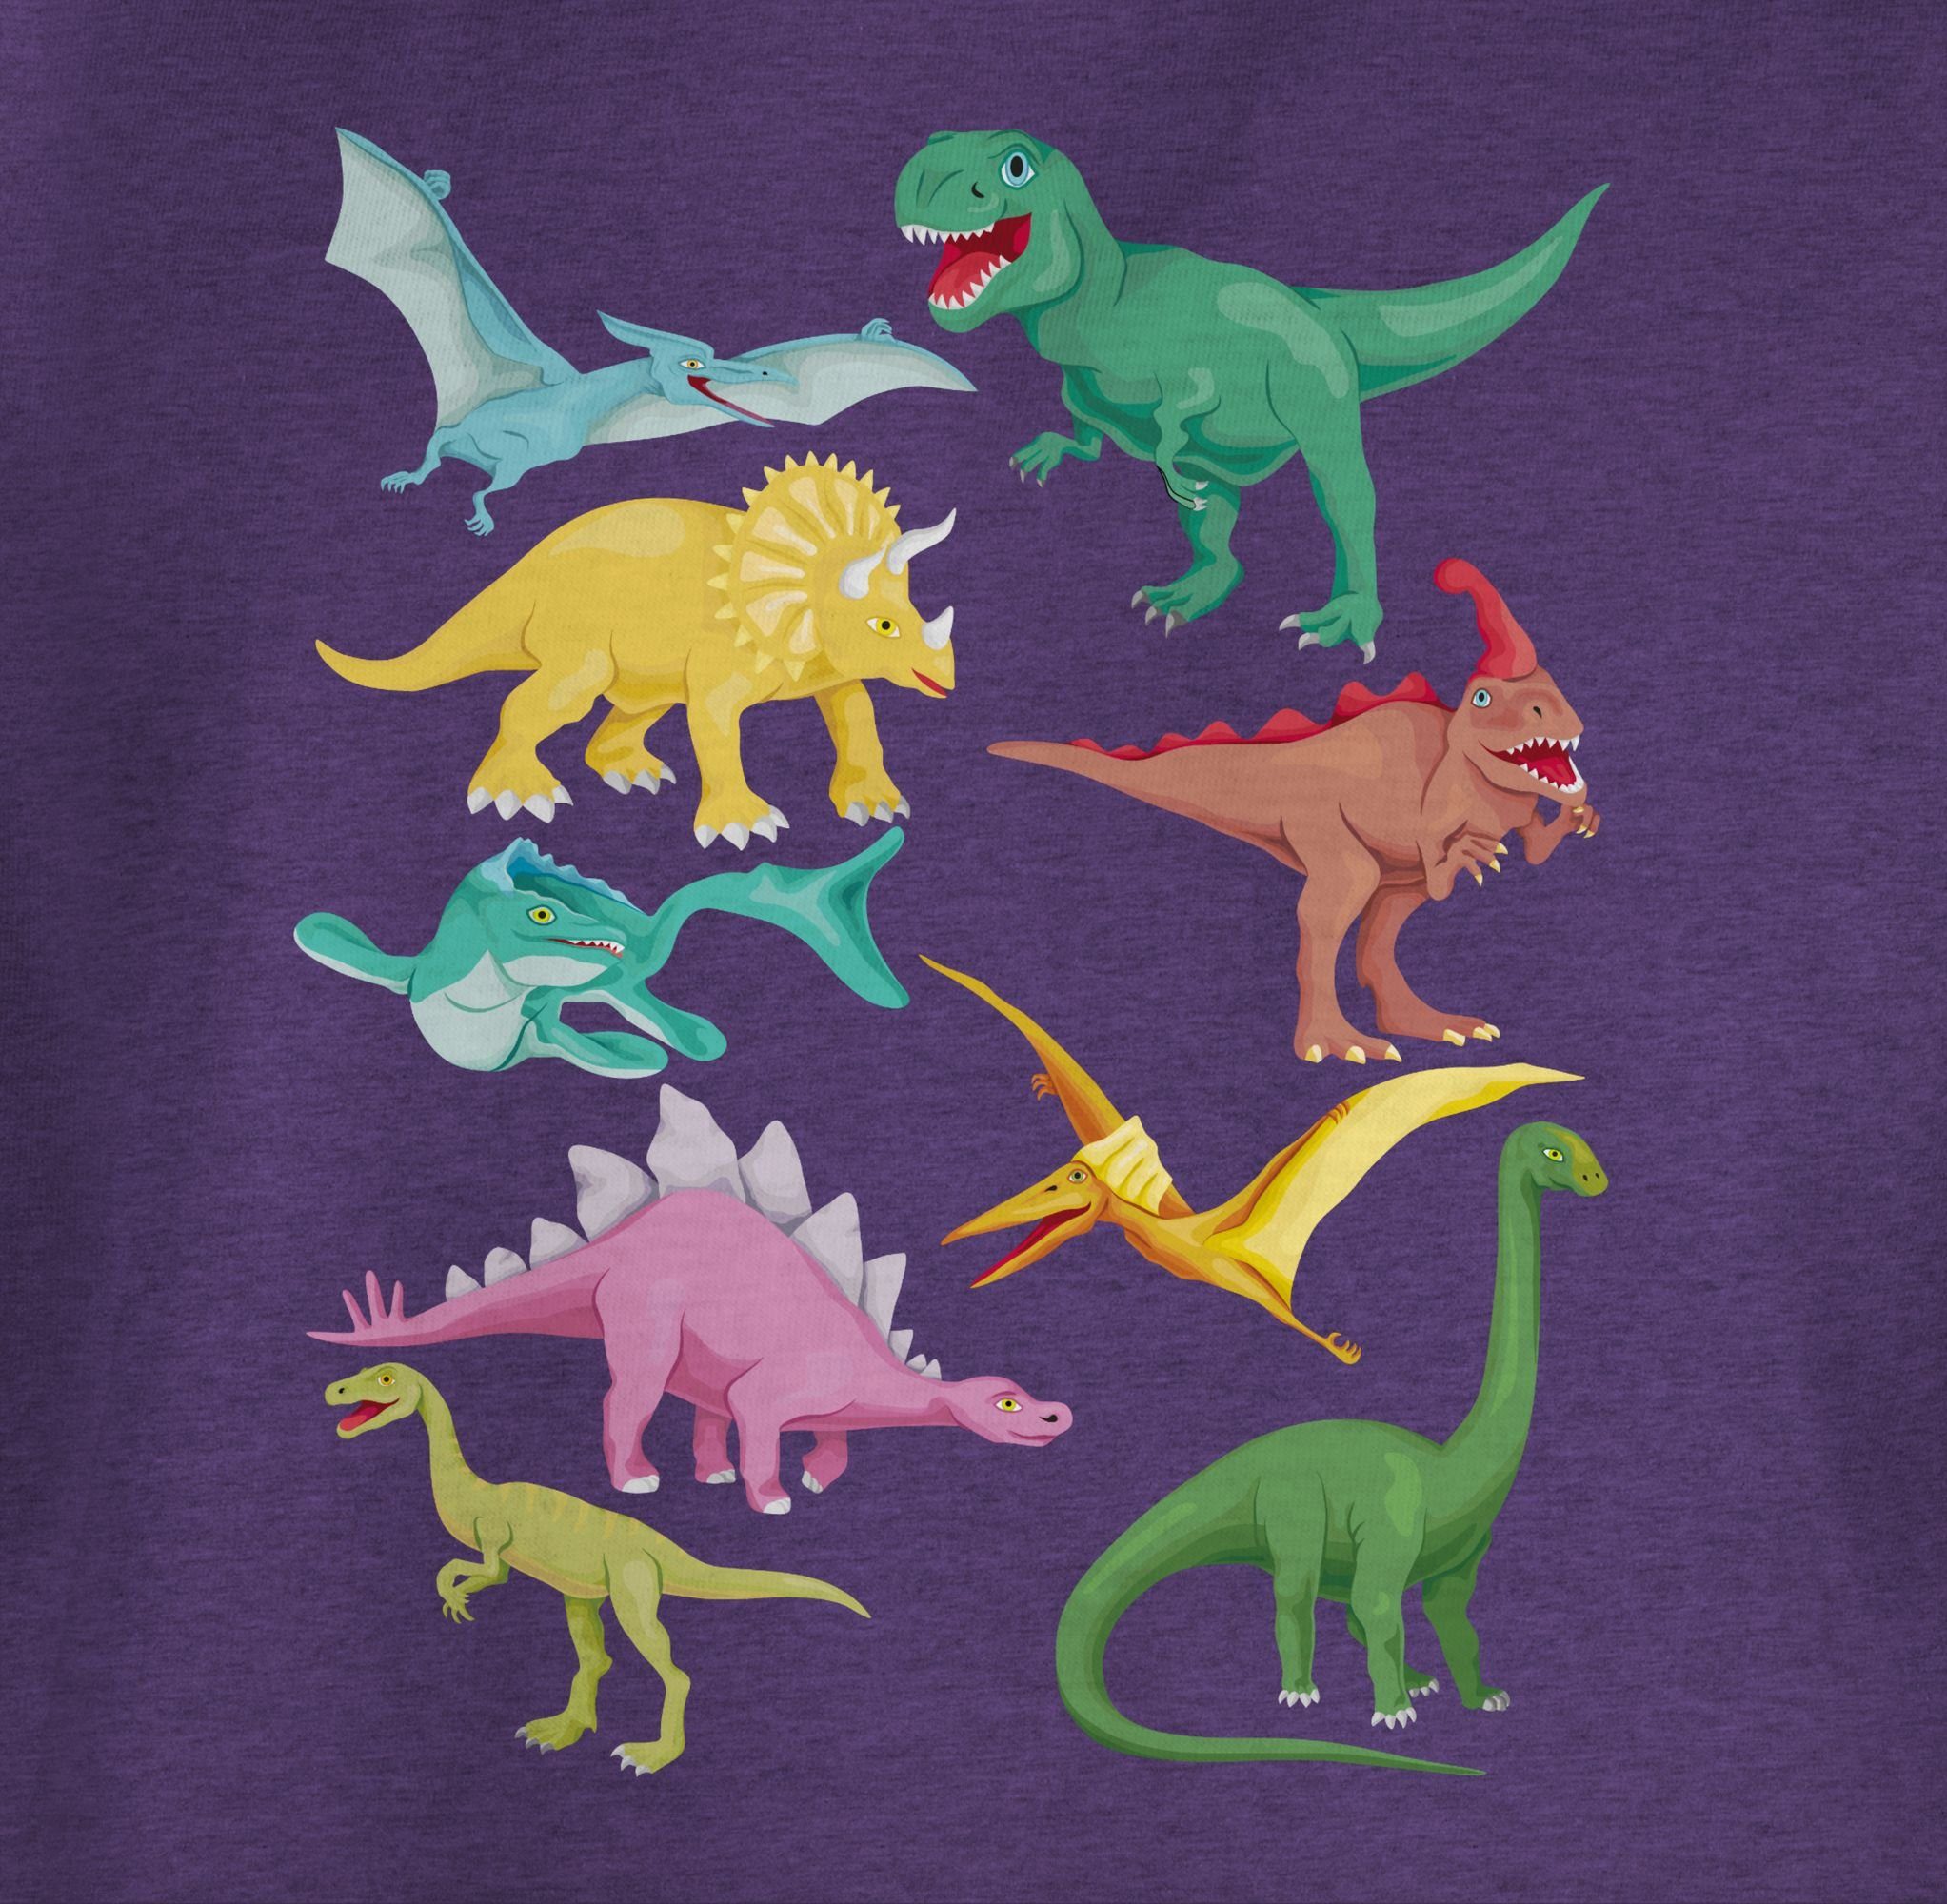 2 Lila T-Shirt Meliert Animal Dinos Print Shirtracer Tiermotiv